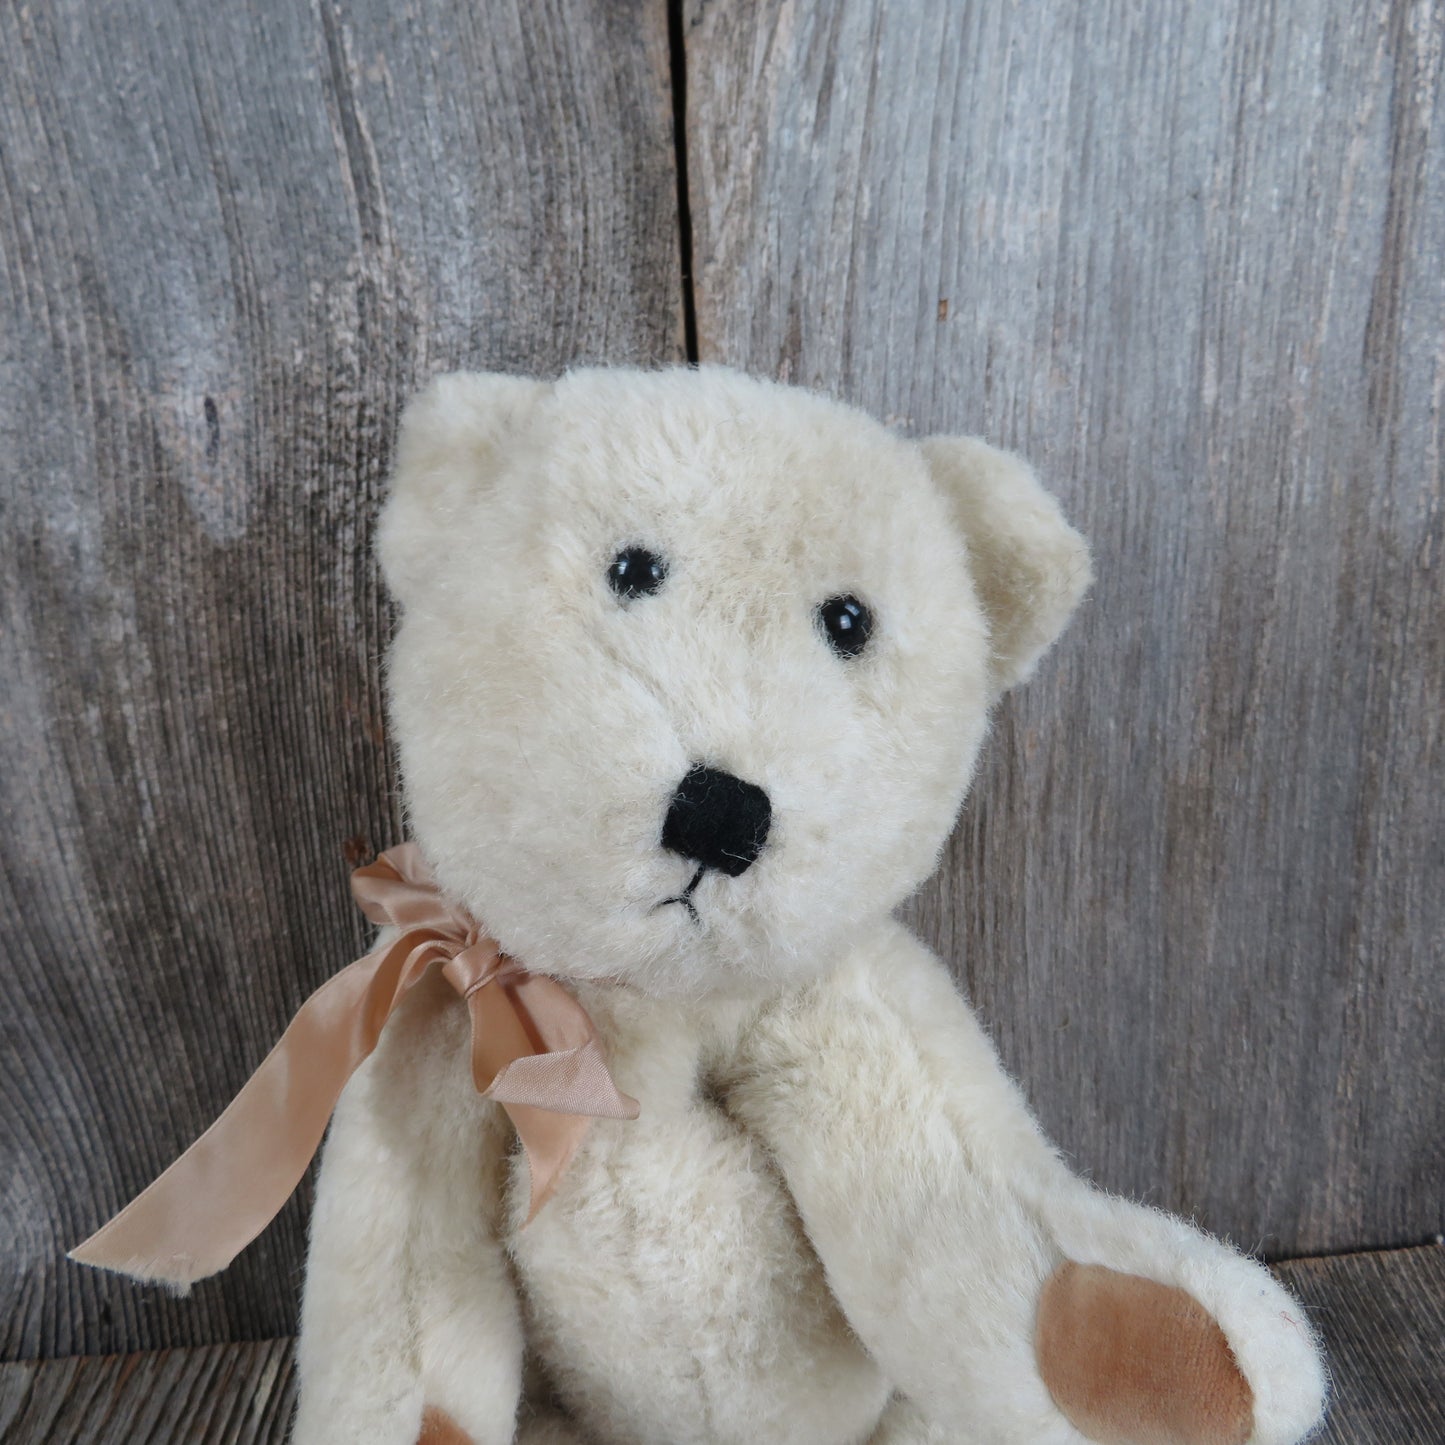 Vintage Teddy Bear Plush Jointed Cream Off White Boyd's Large Beanie Bean Bag Floppy Stuffed Animal